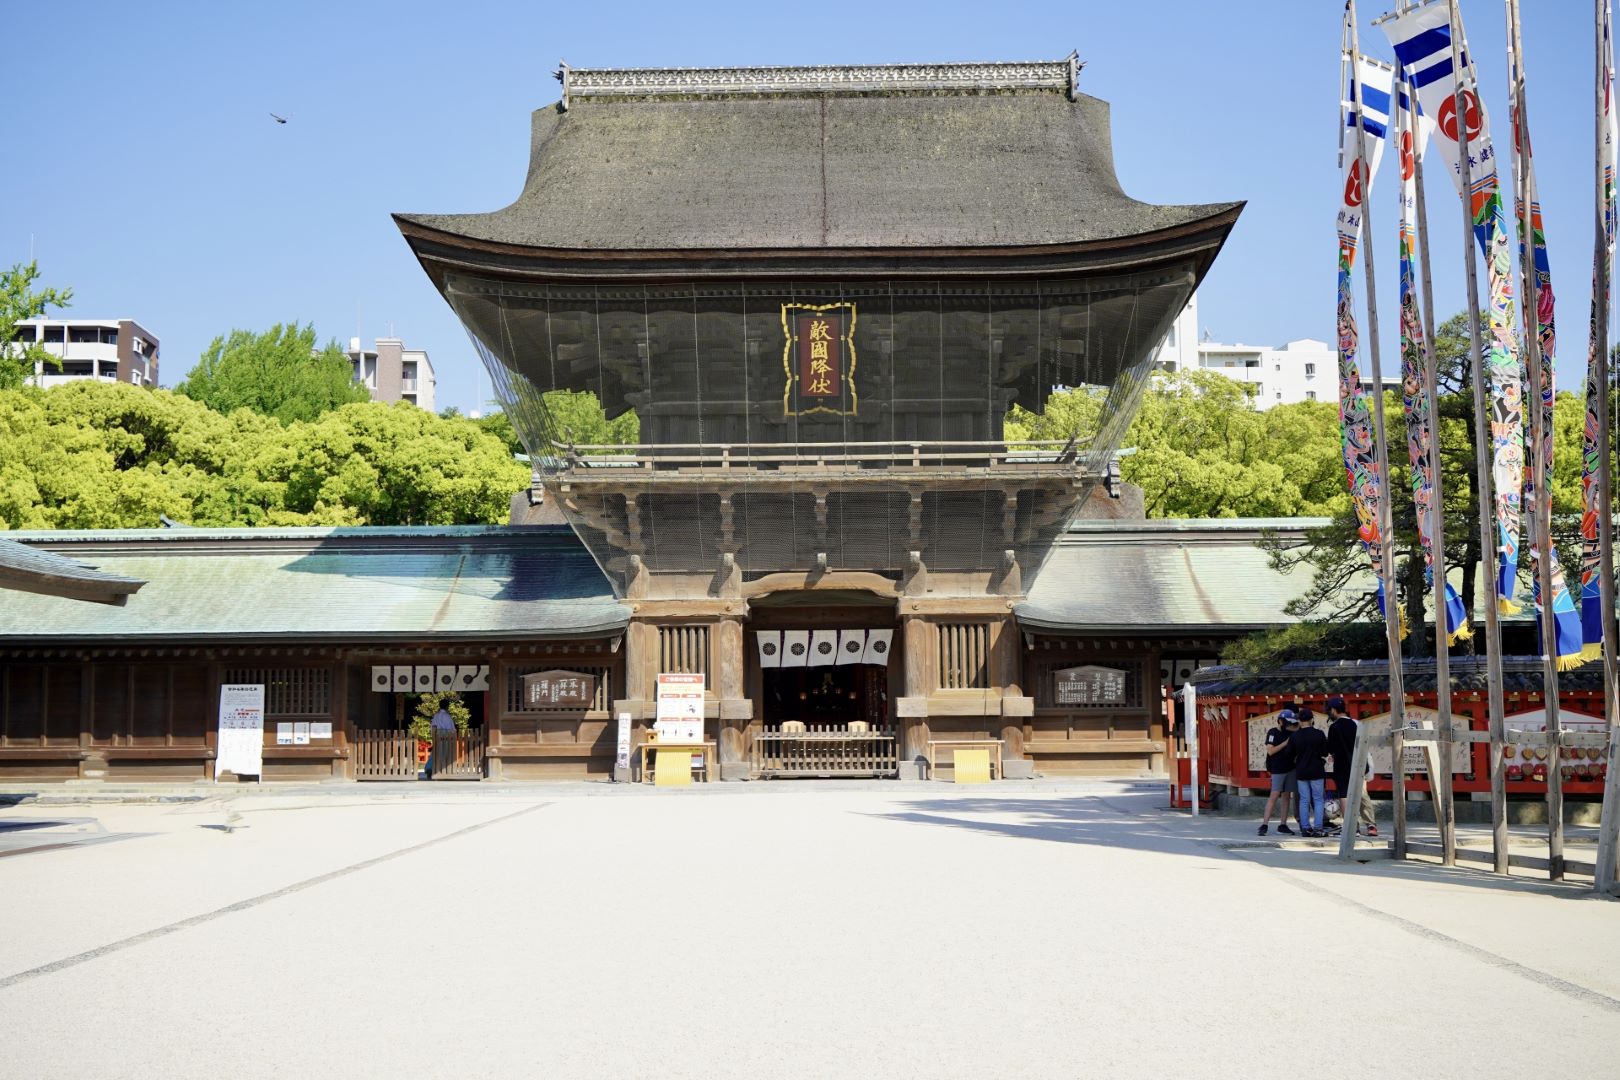 The tower gate of Fukuoka Hakozaki Shrine